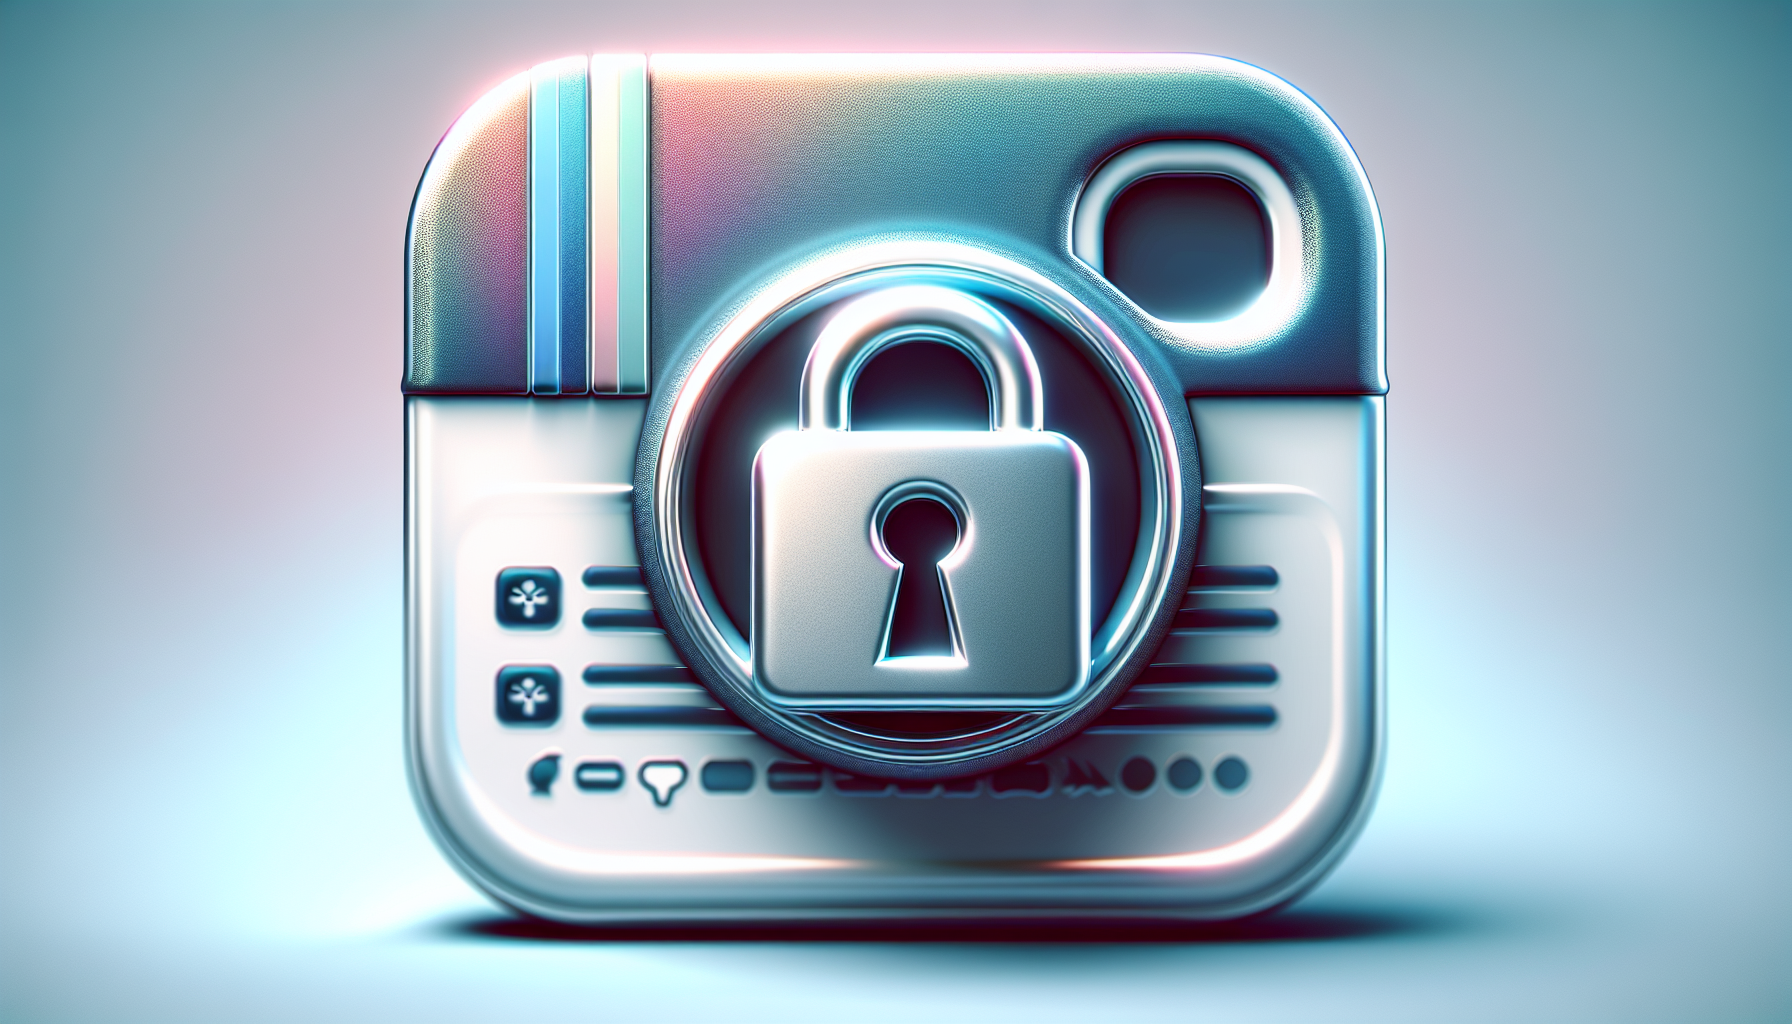 Illustration of a lock symbol on an Instagram profile